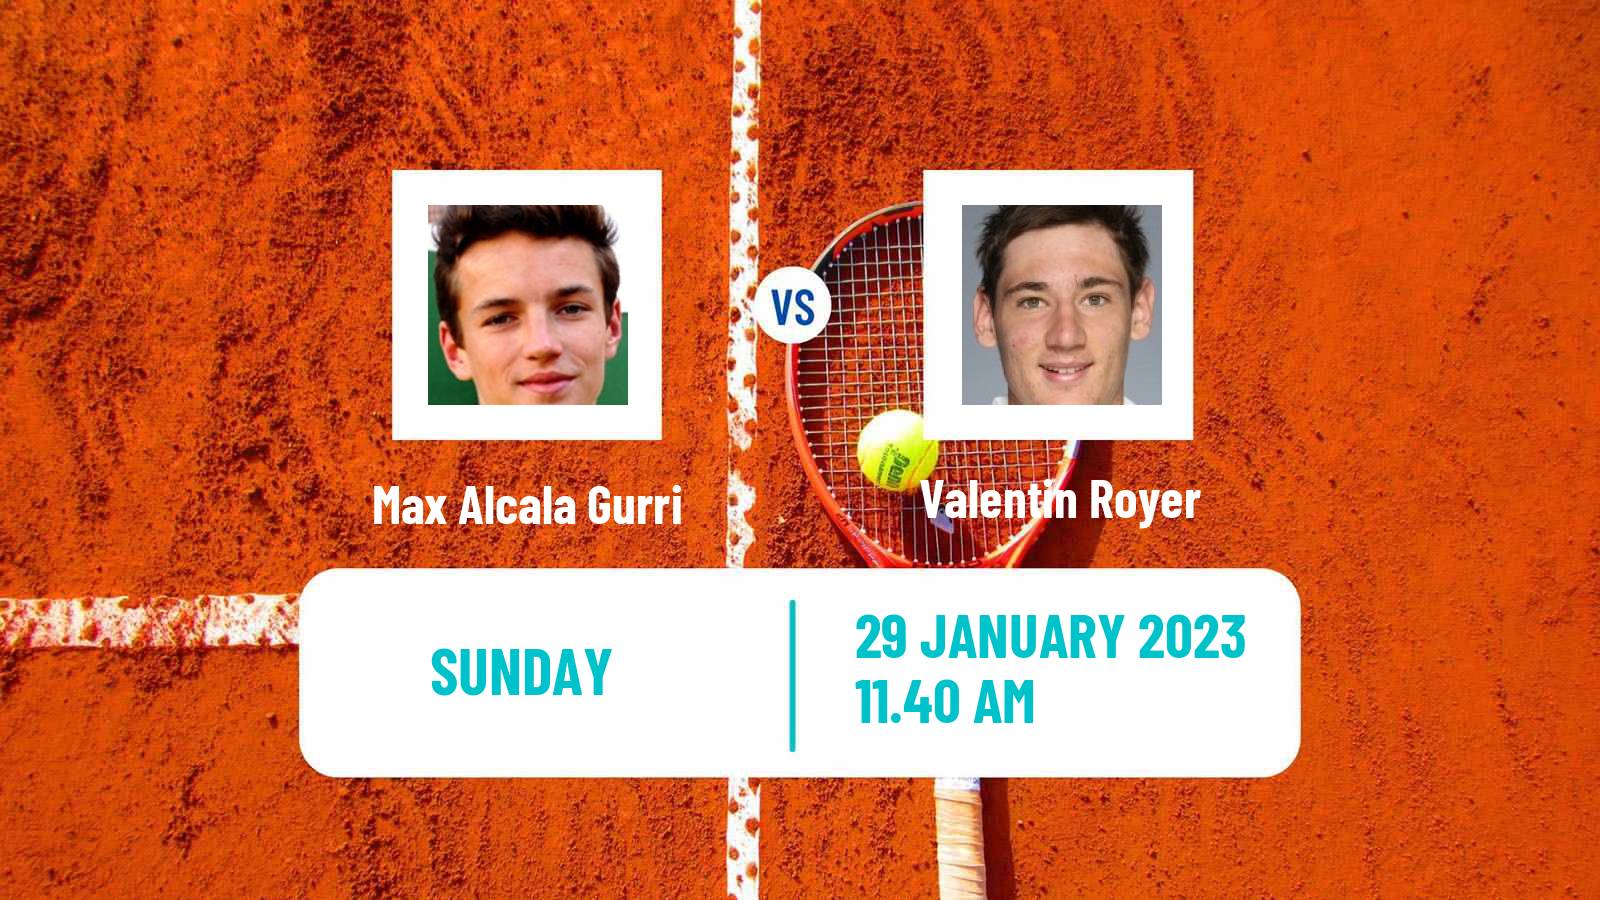 Tennis ATP Challenger Max Alcala Gurri - Valentin Royer